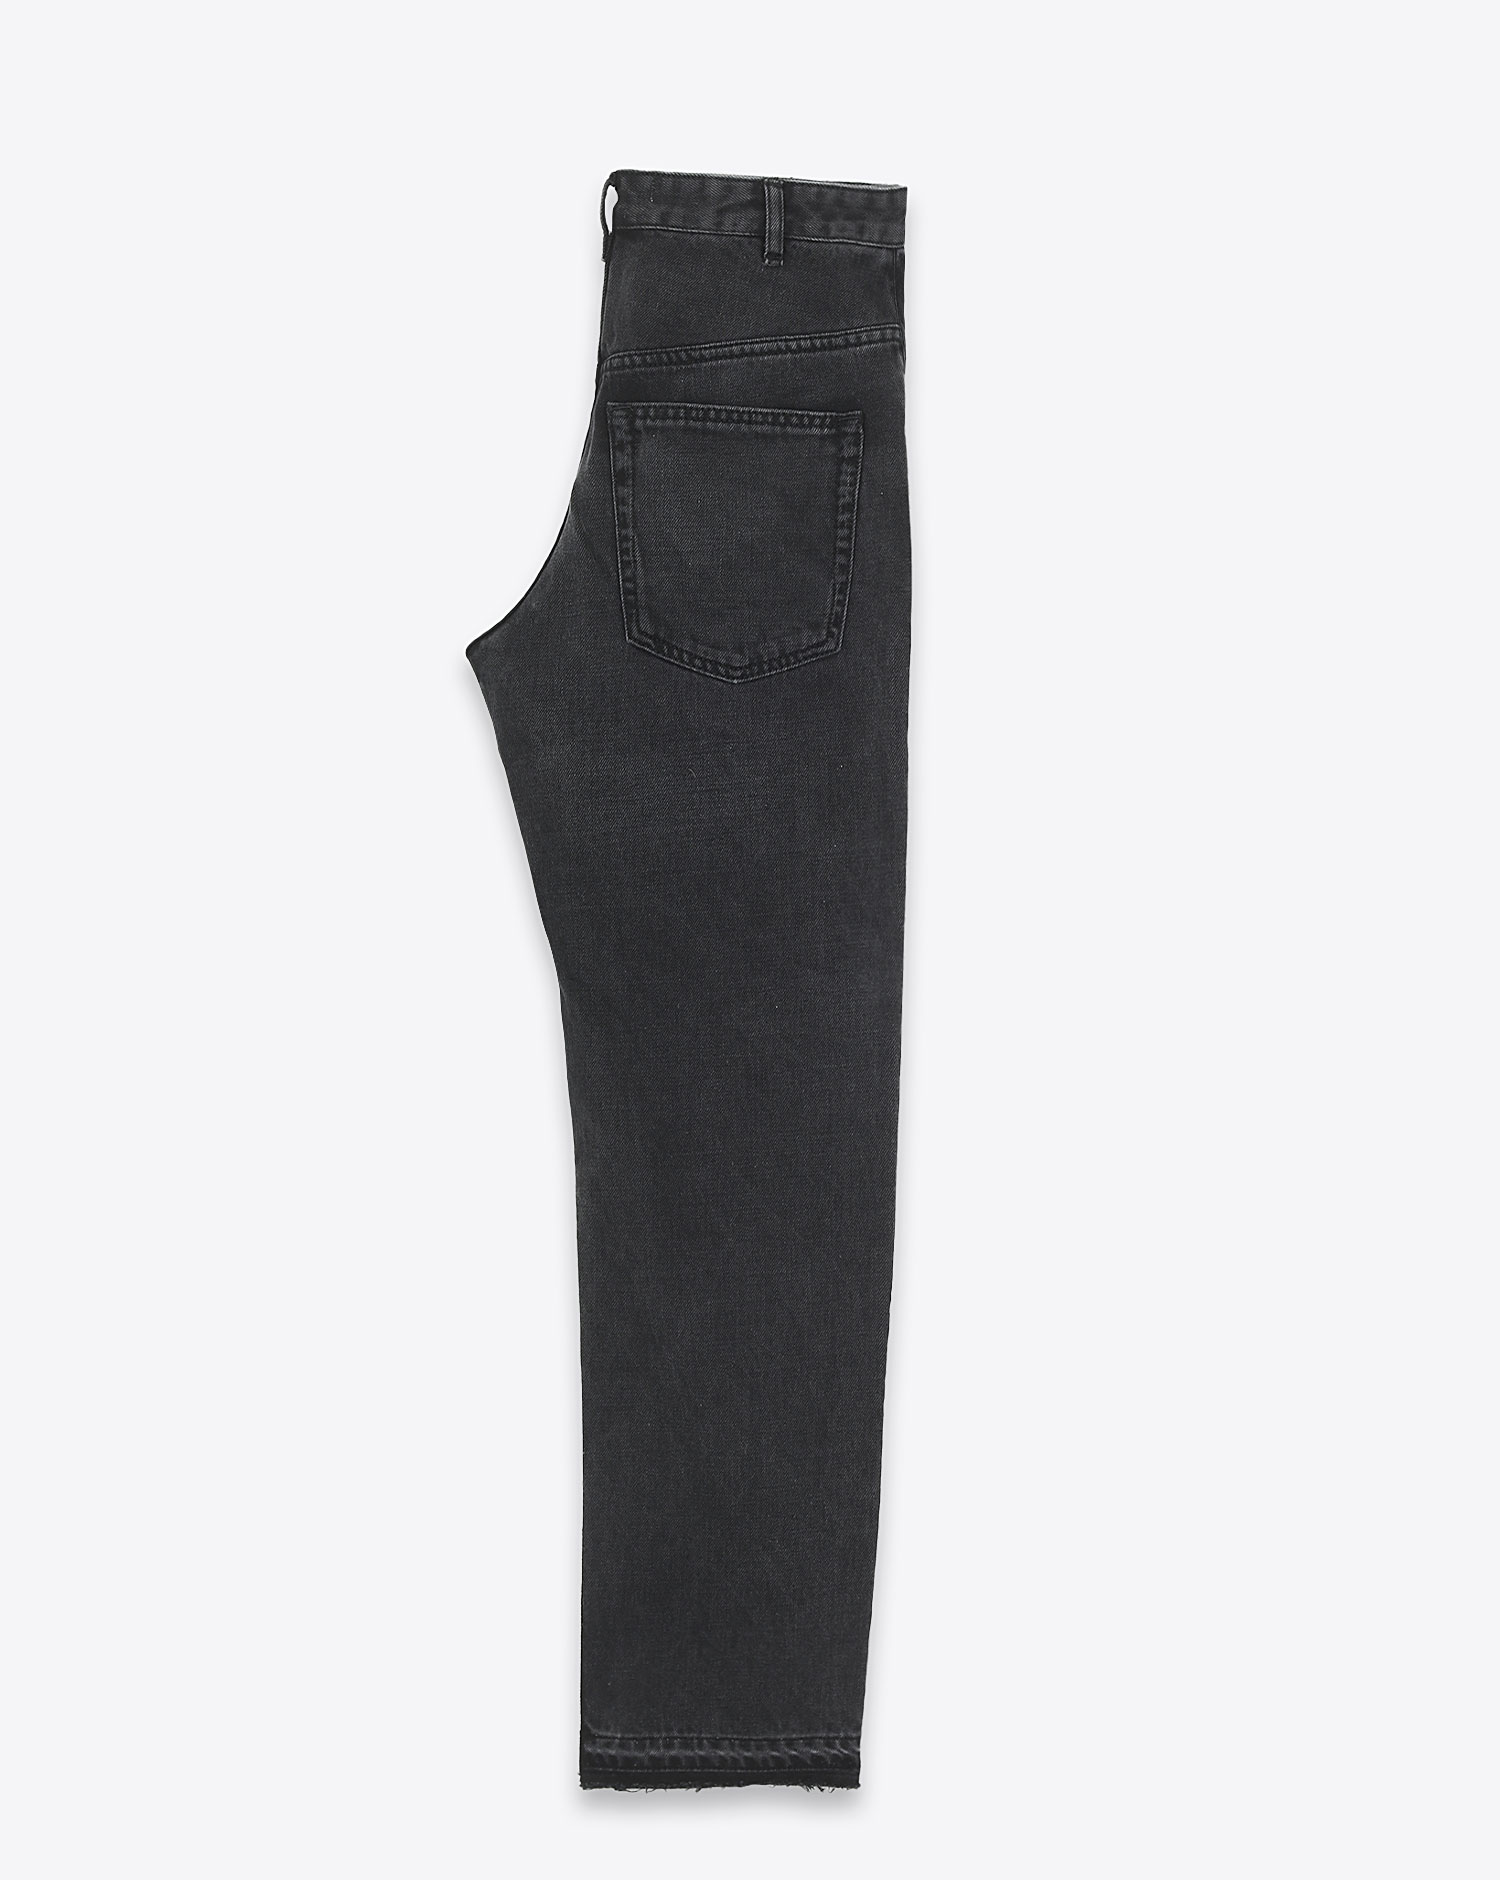 Jeans boutons apparents Belden faded black Isabel Marant Etoile 